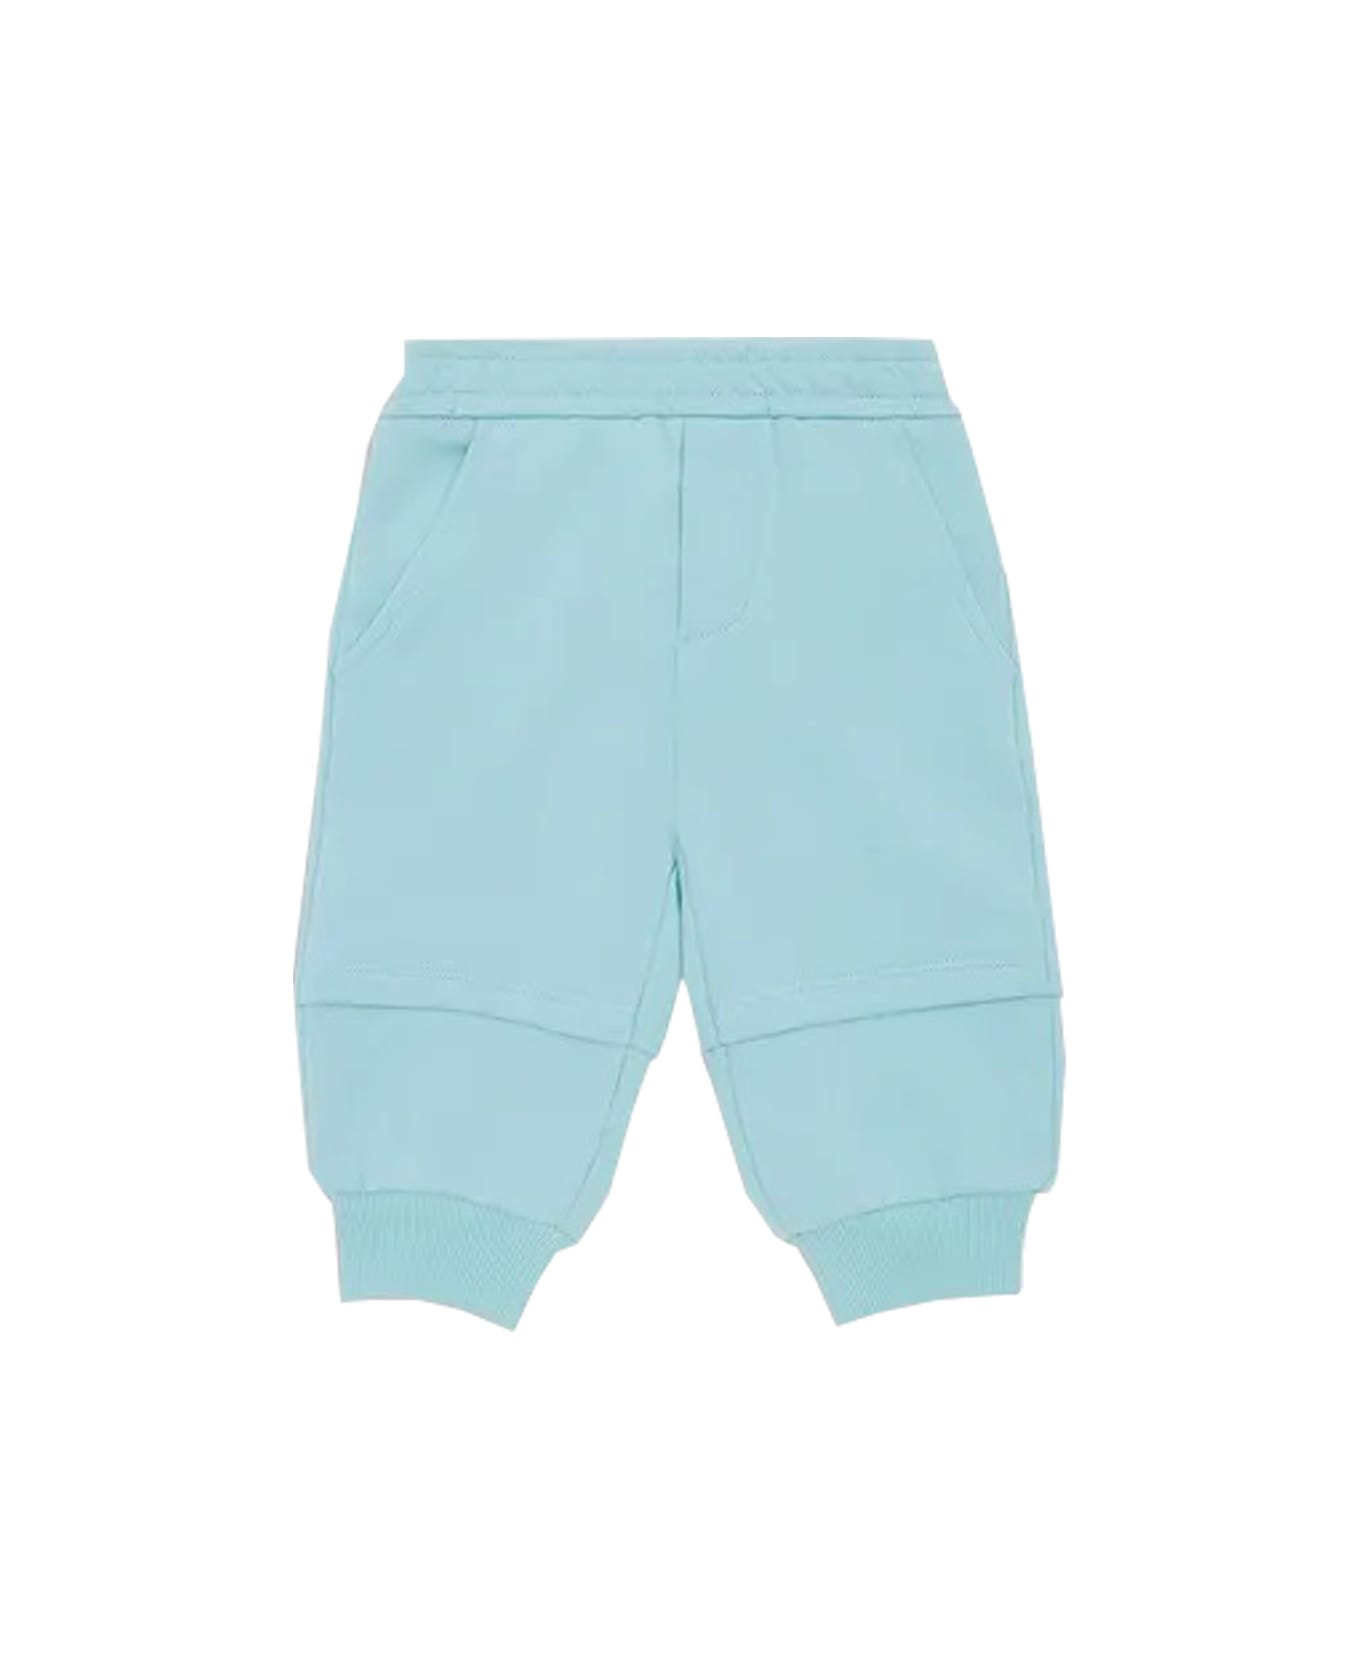 Emporio Armani Jersey Pants - Light blue